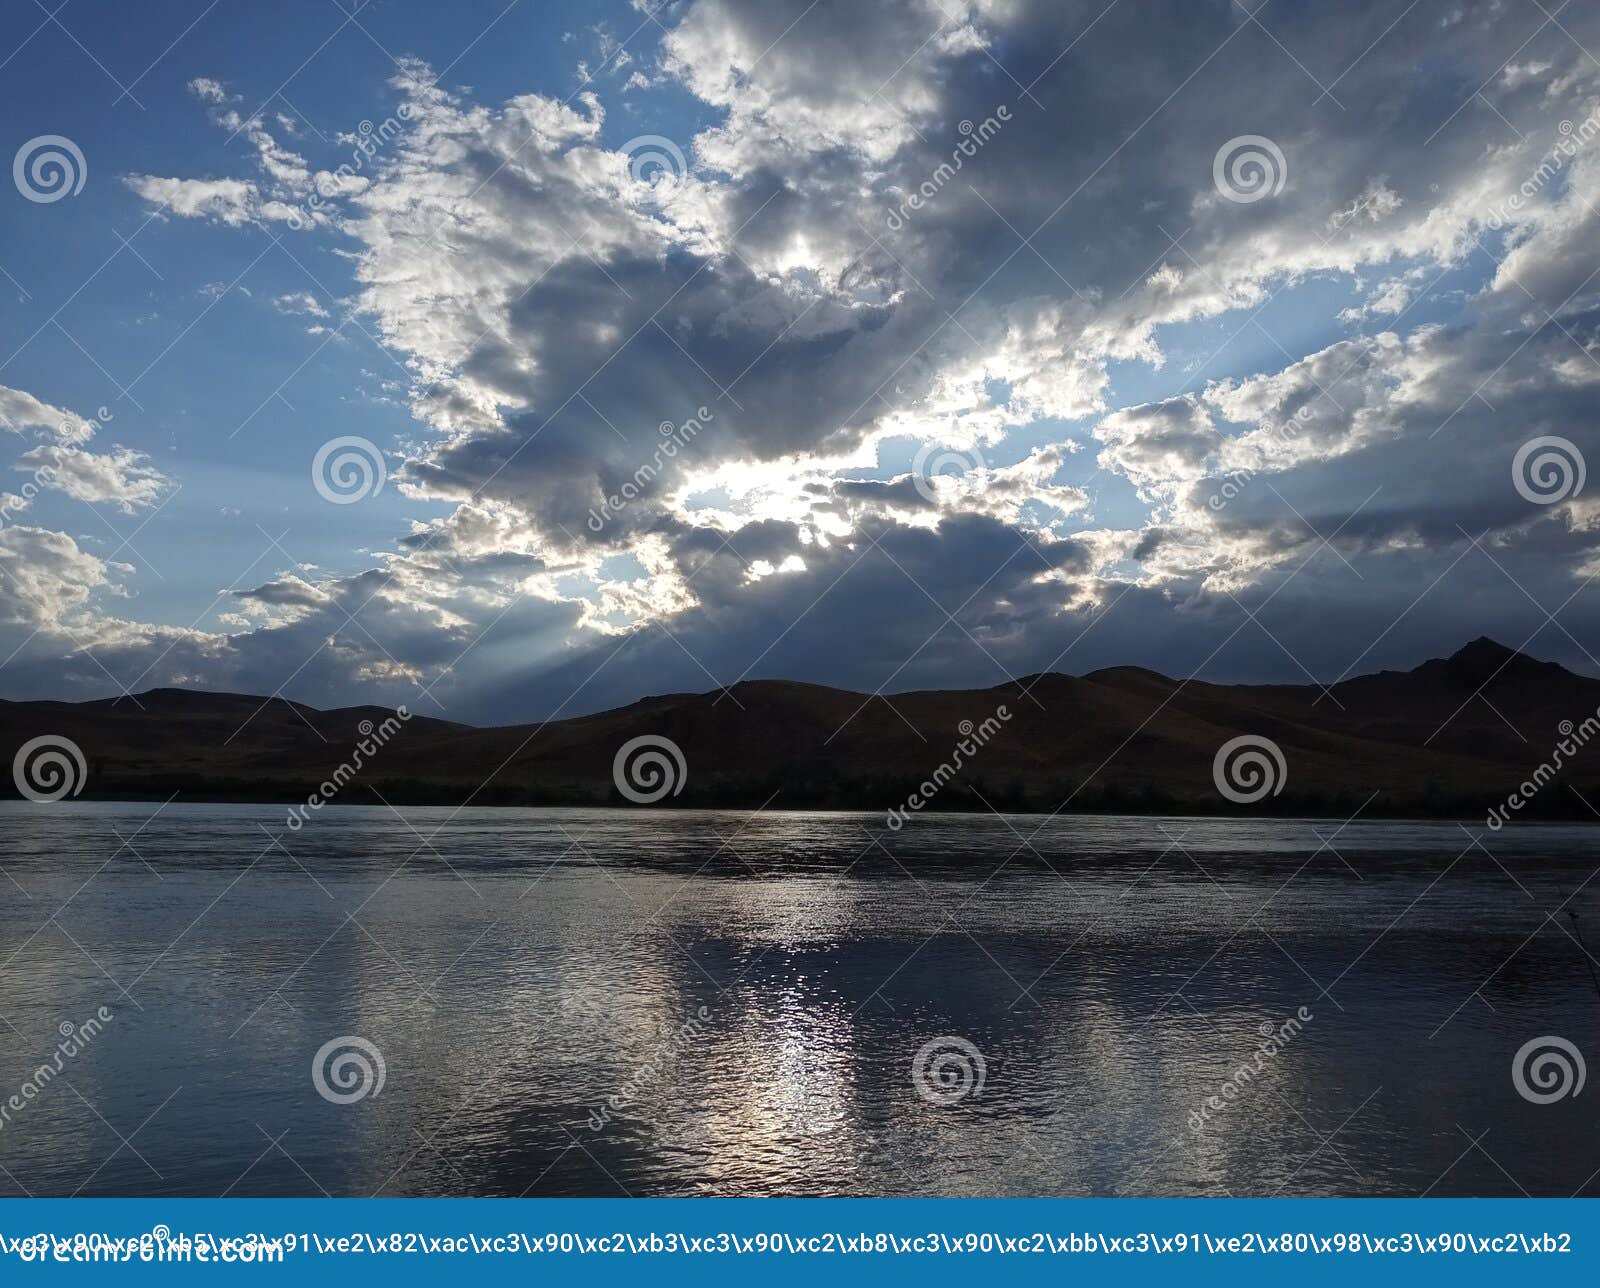 sunset on the ili river, kazakhstan